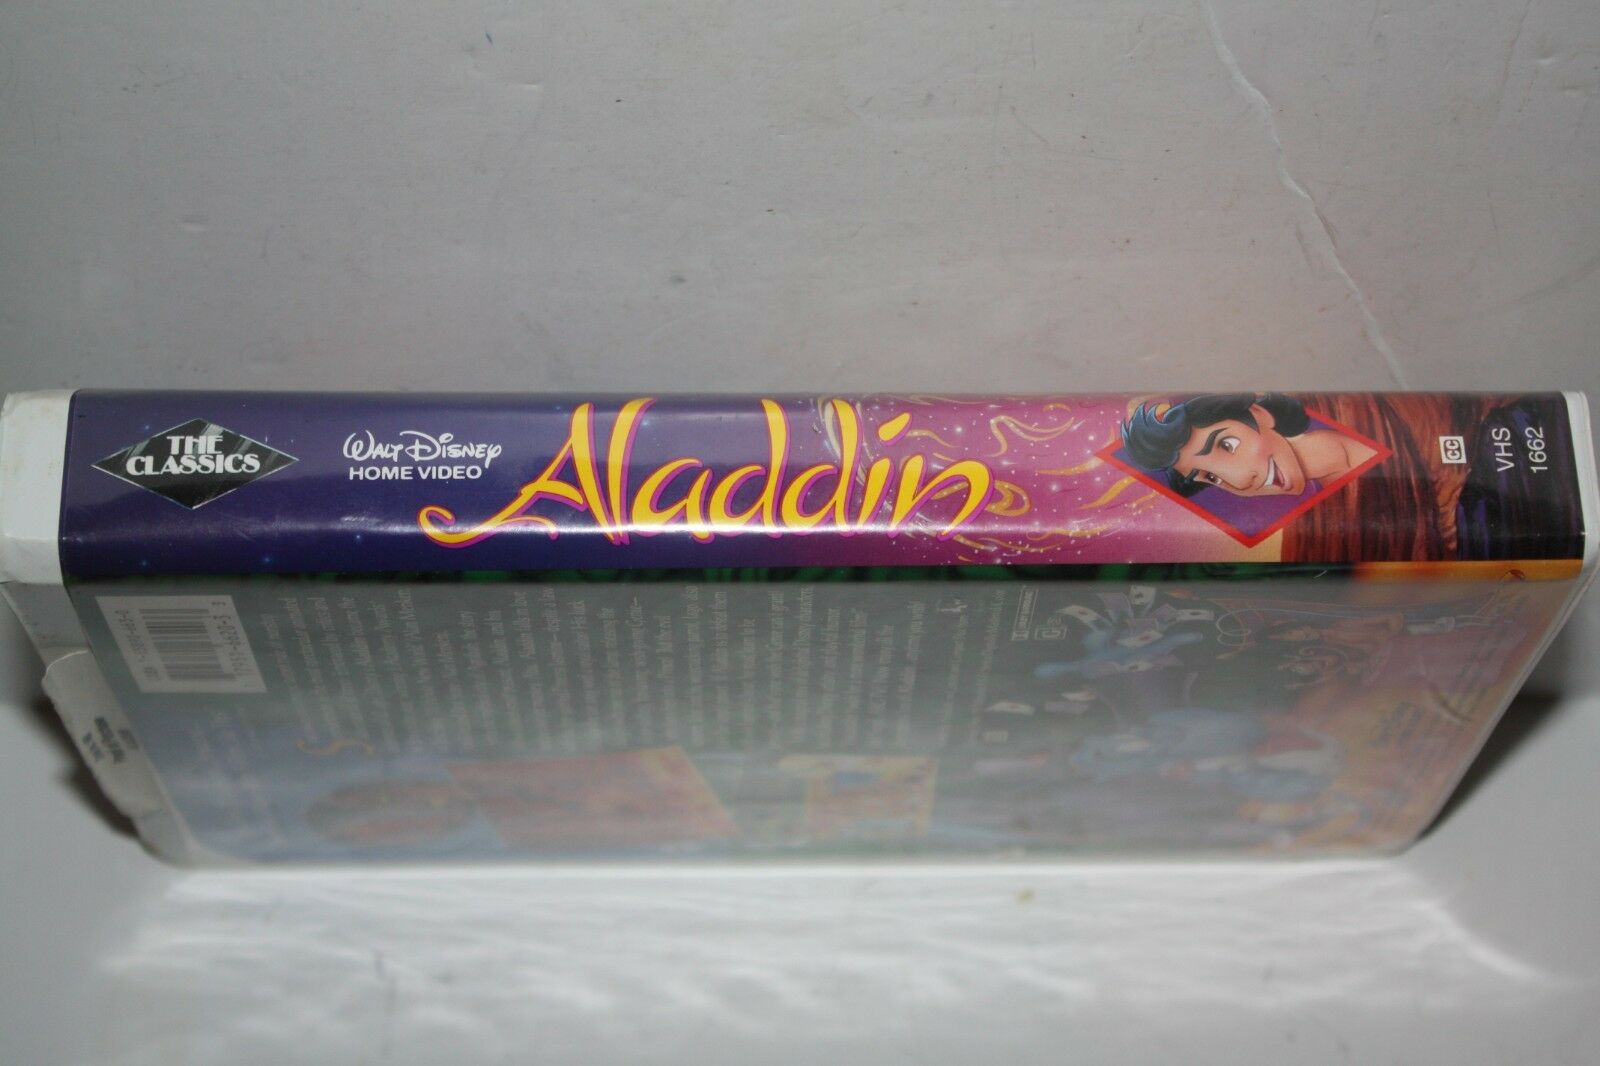 spine of Aladdin vhs tape